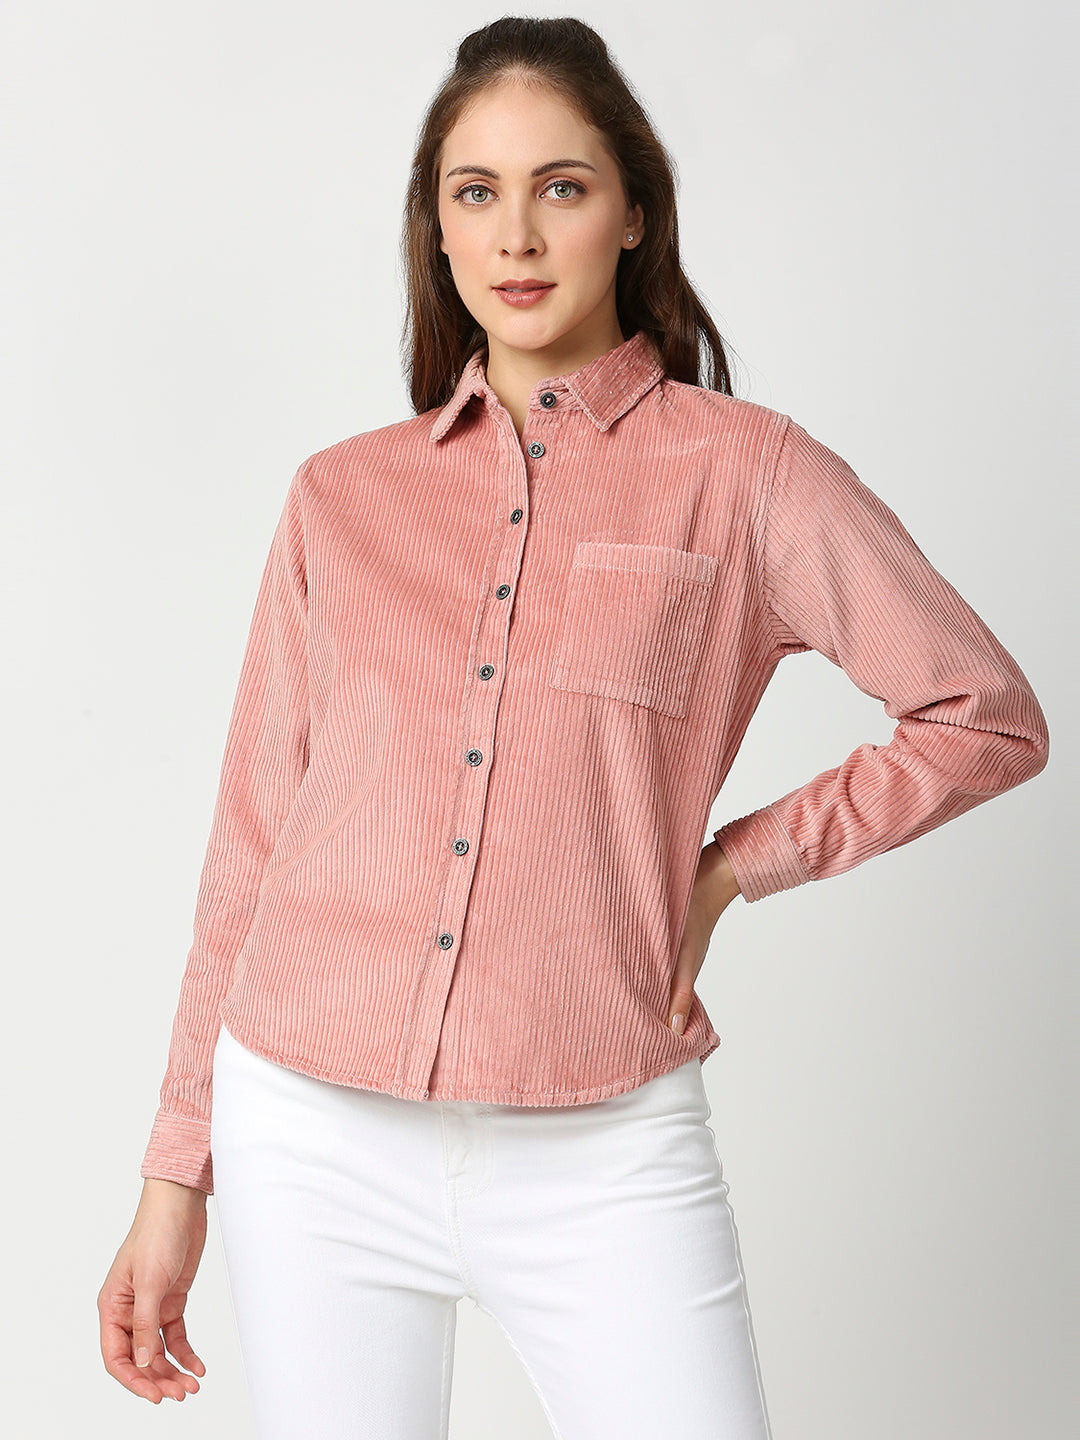 Buy Blamblack Women's Pink Color Baggy Full Sleeves Shirt